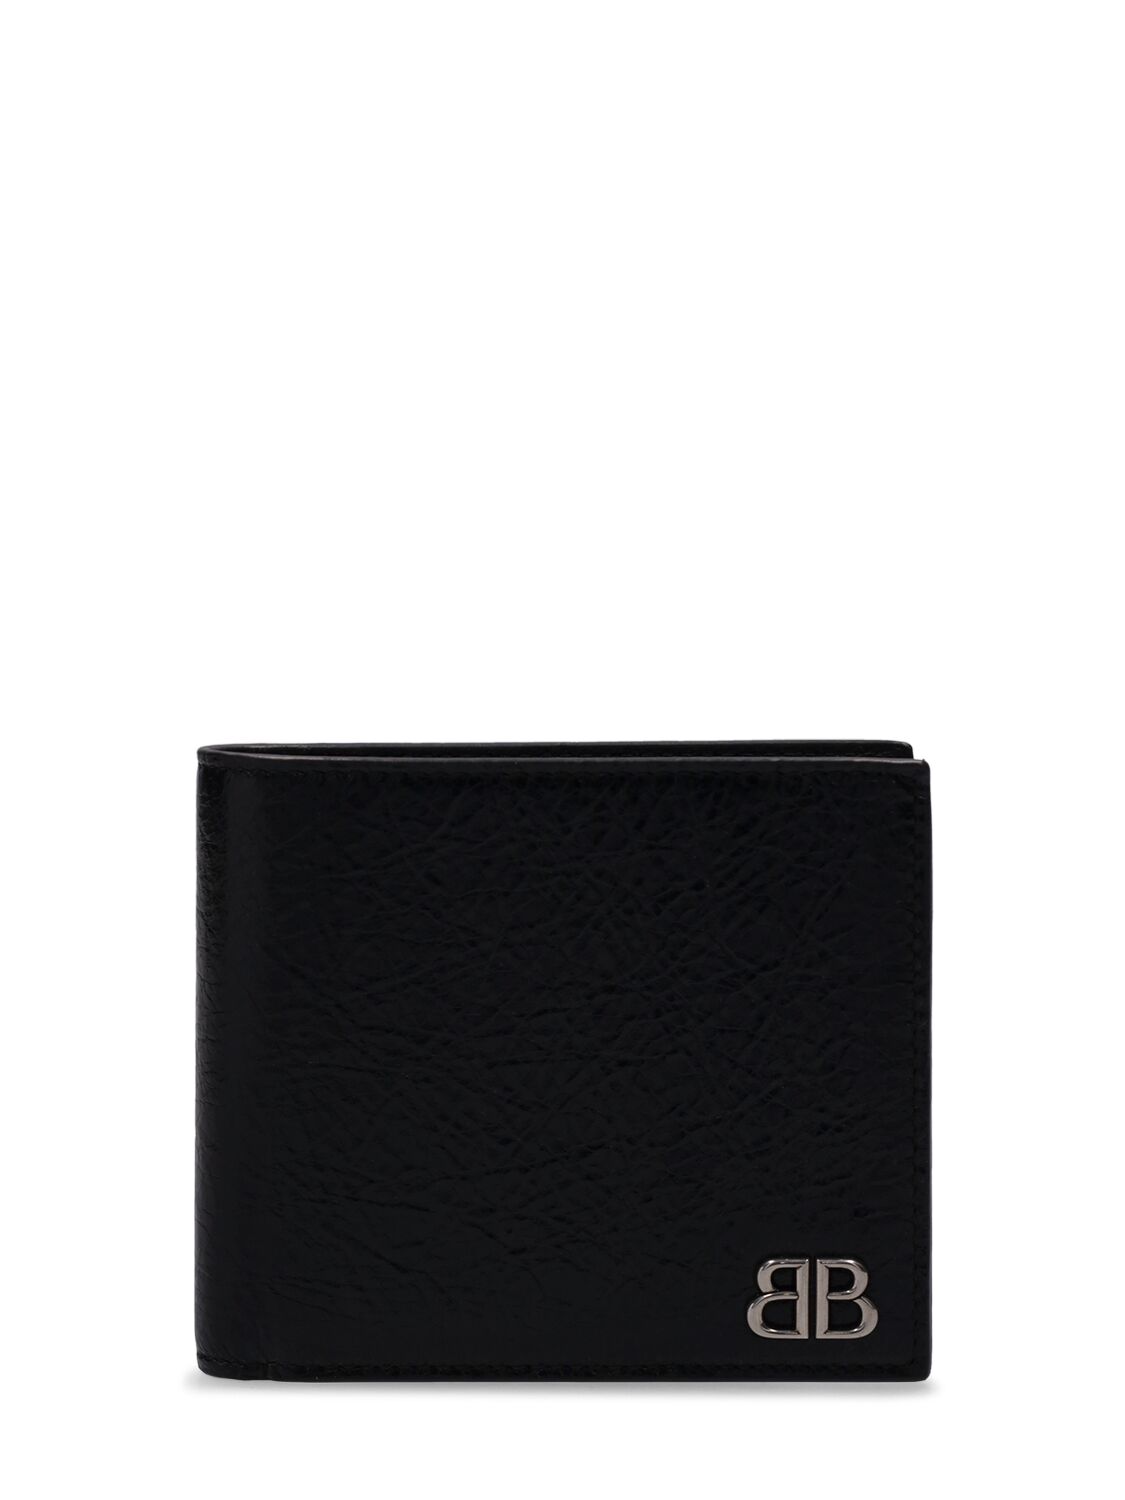 Balenciaga Cagole Leather Wallet In Black